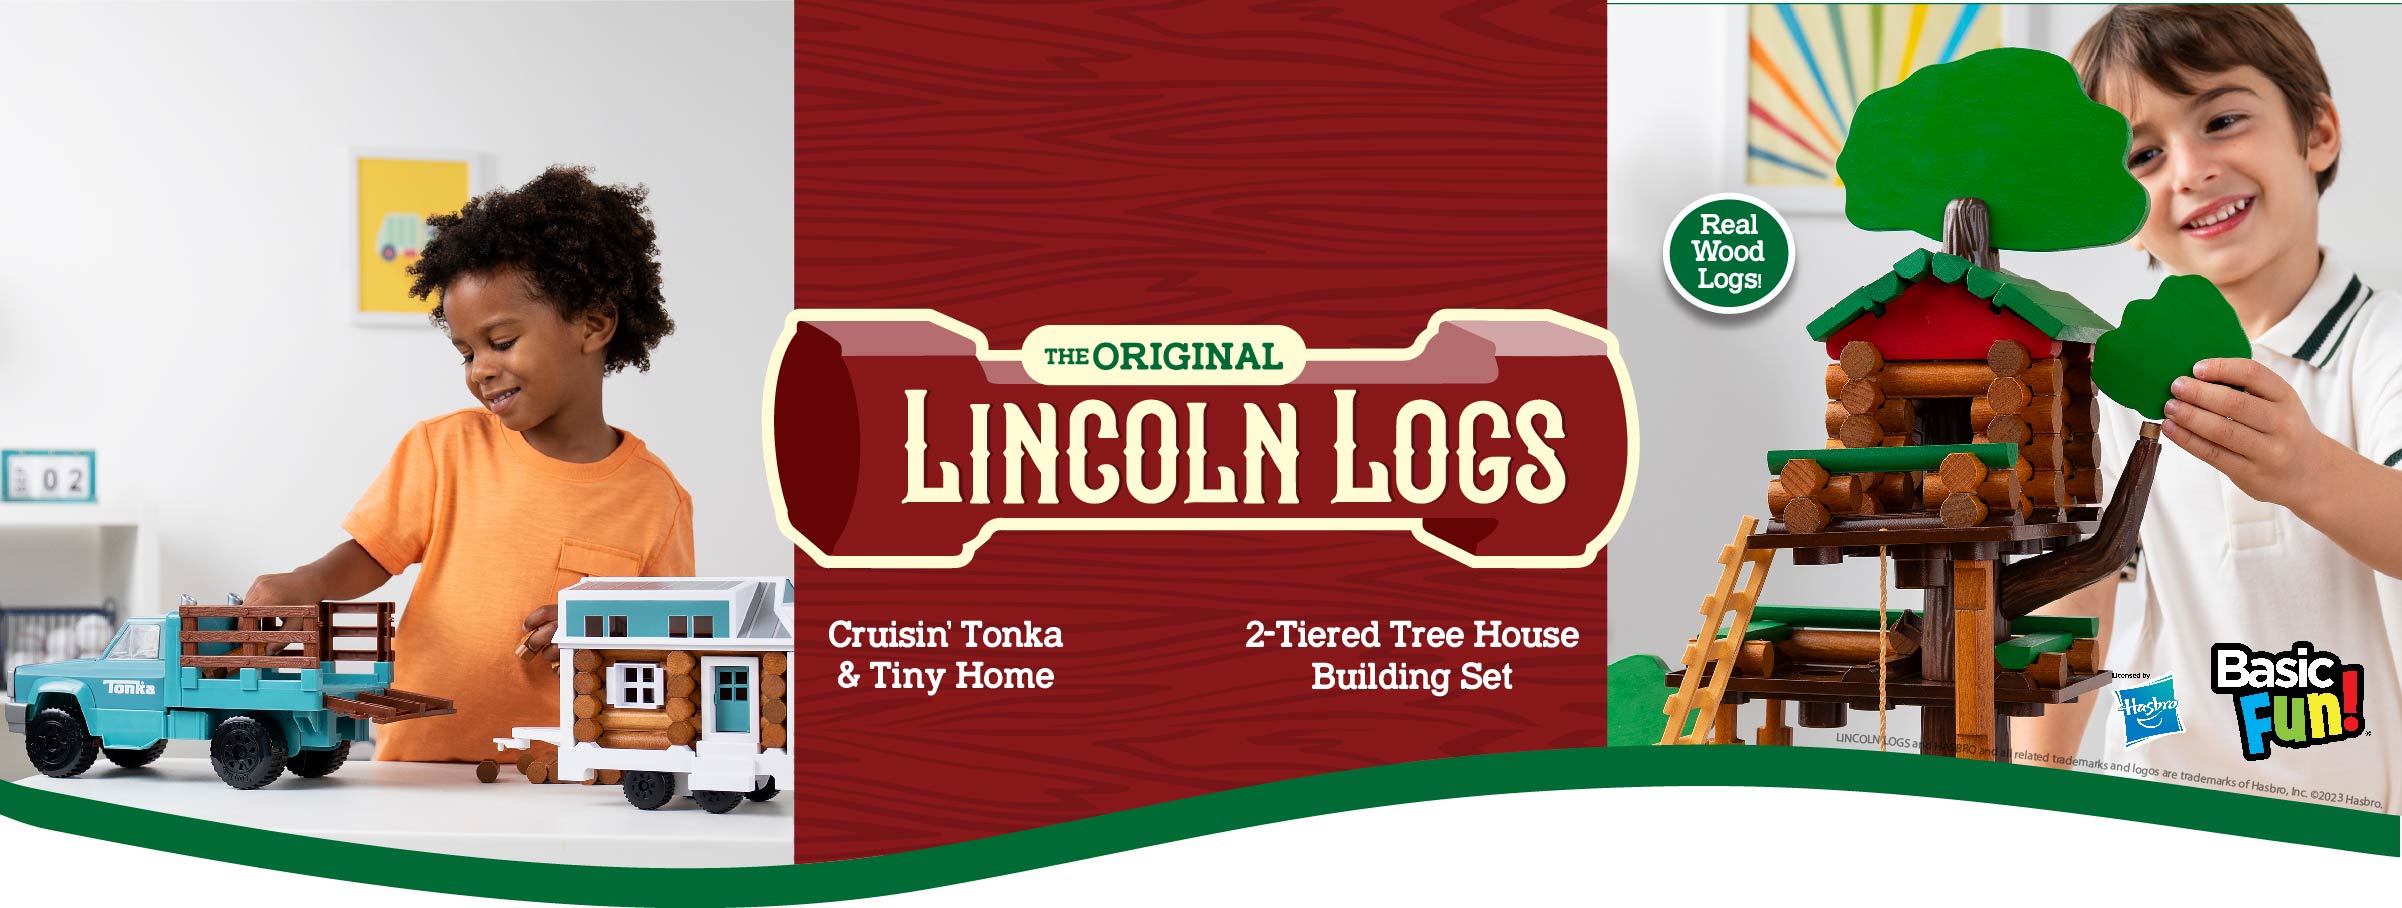 Lincoln Logs banner